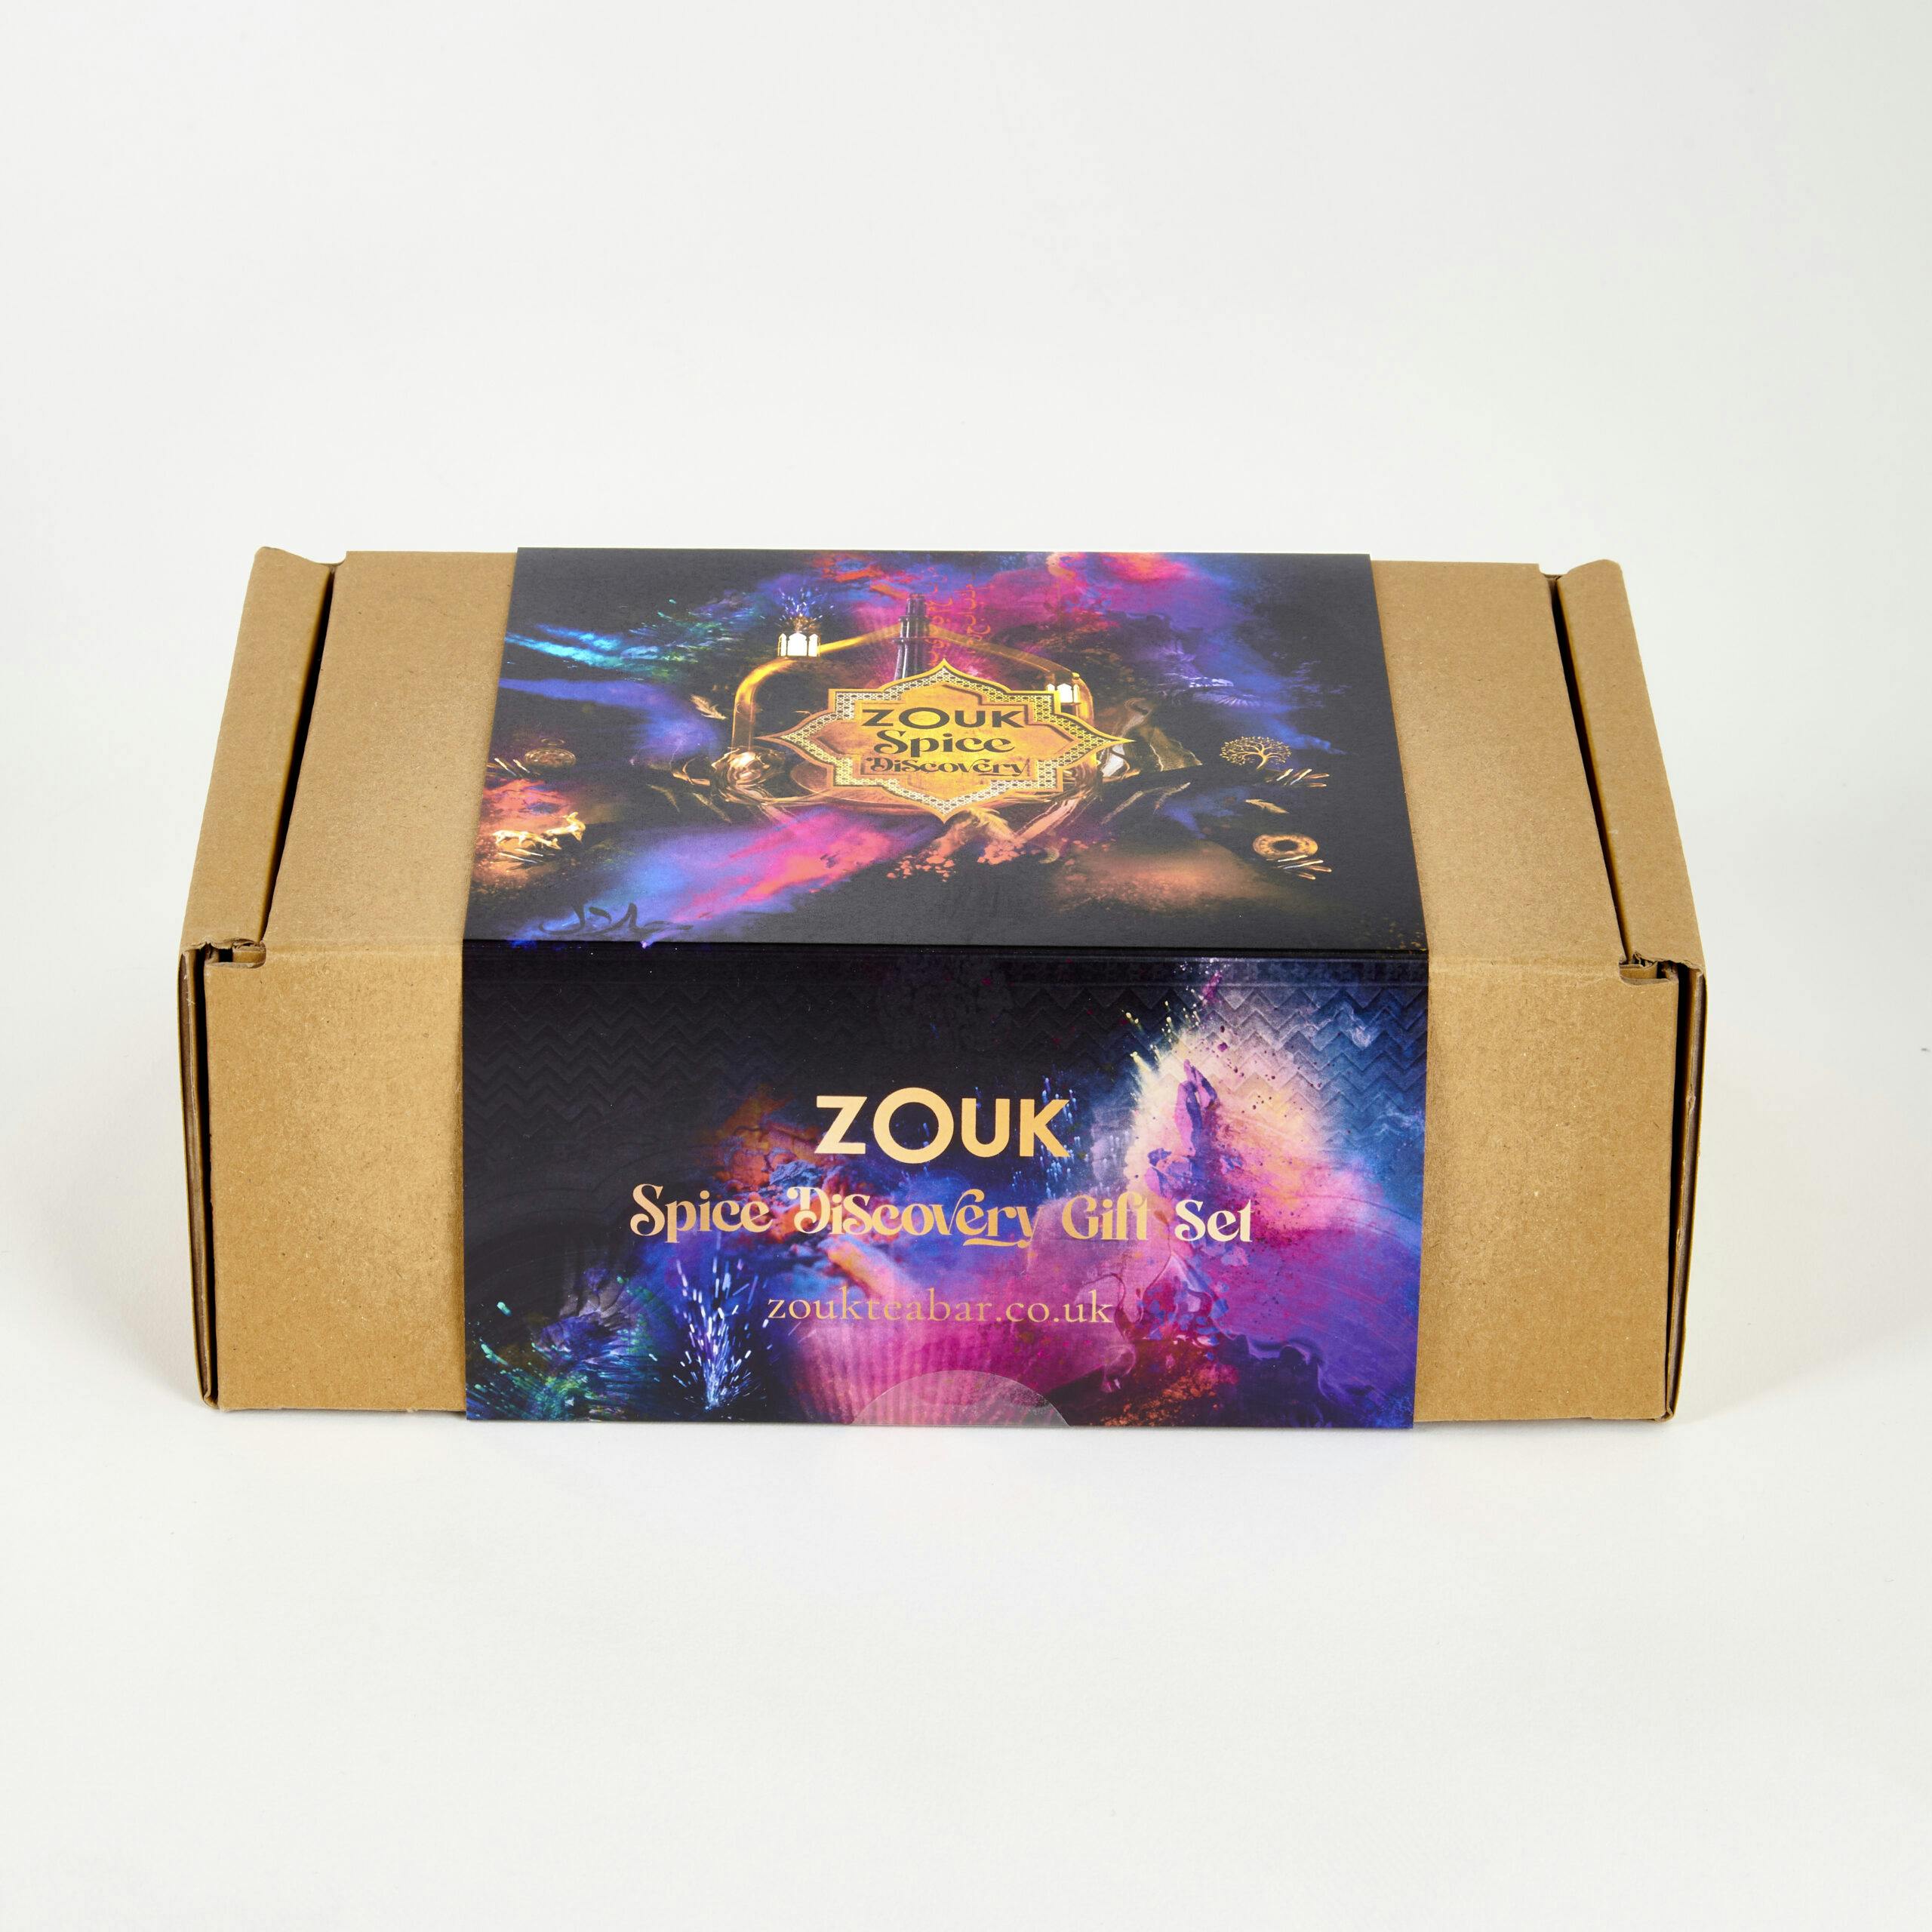 Zouk's Spice Discovery Kit